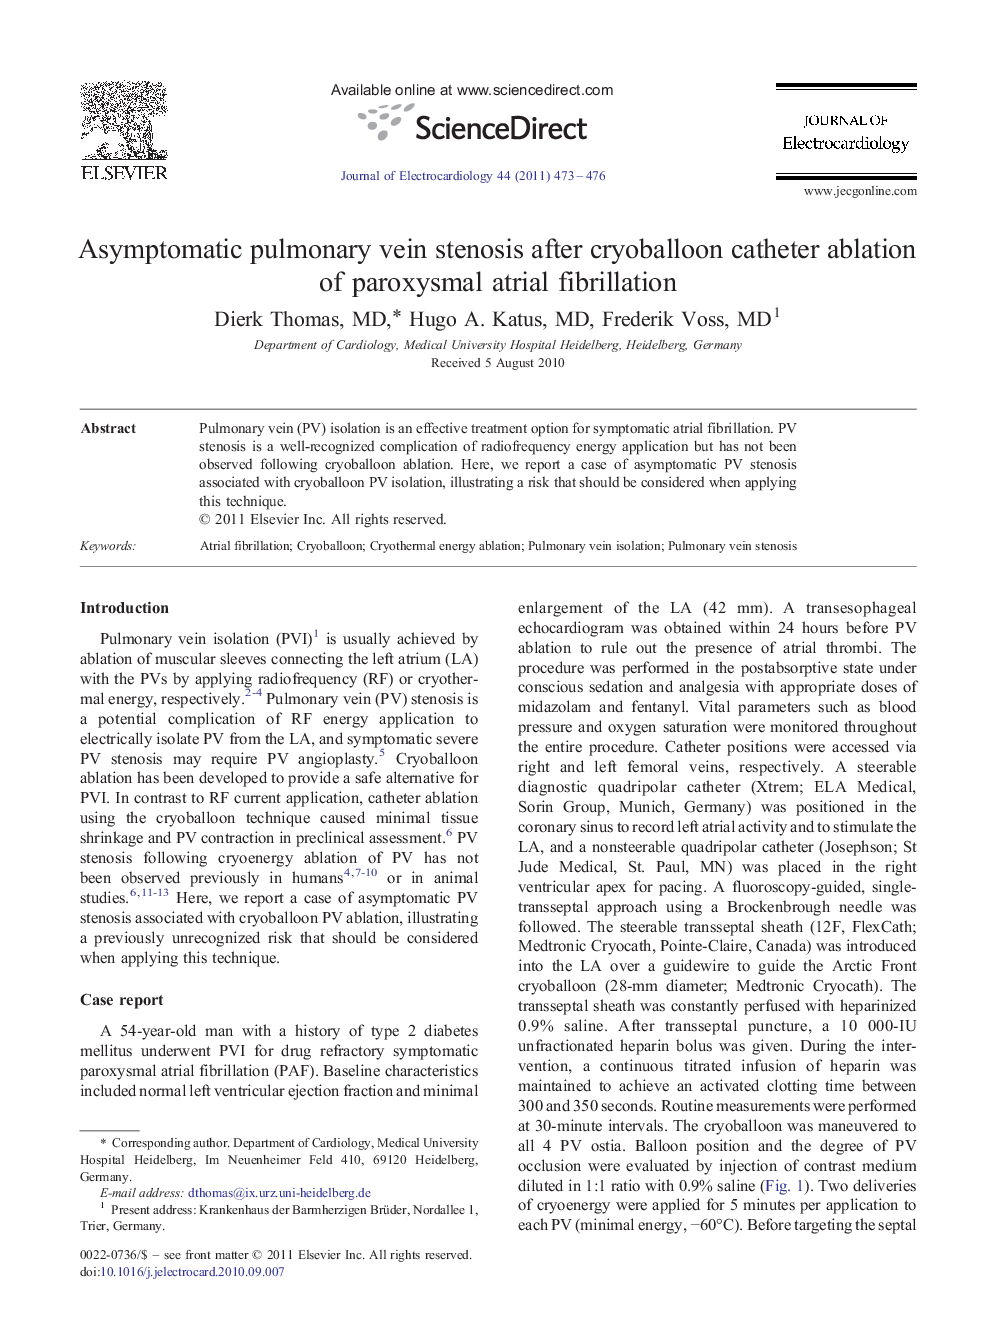 Asymptomatic pulmonary vein stenosis after cryoballoon catheter ablation of paroxysmal atrial fibrillation